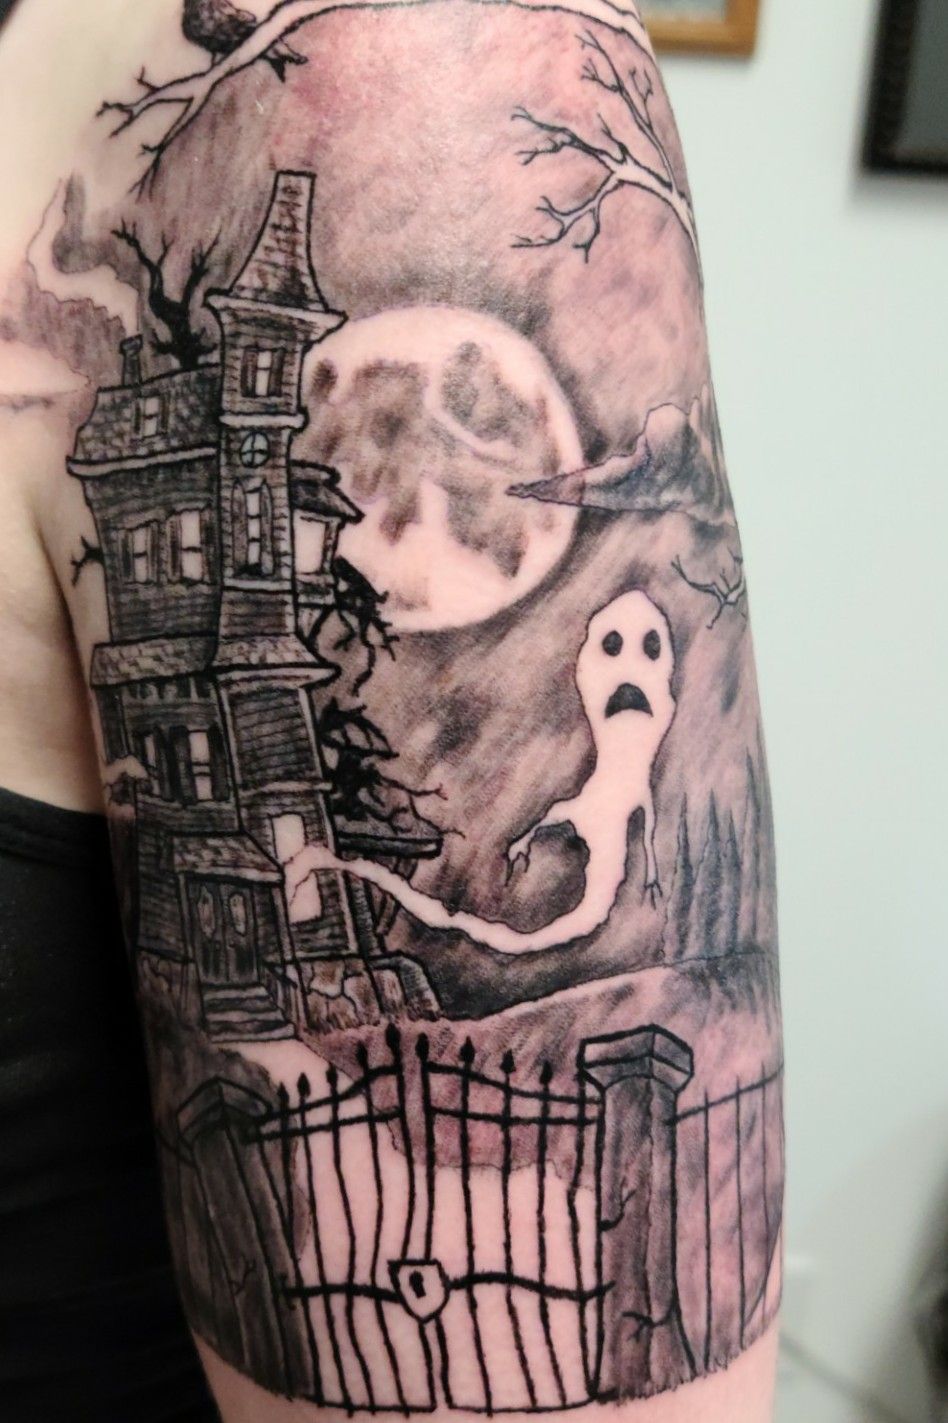 Haunted house tattoo | Haunted house tattoo, Home tattoo, Spooky tattoos